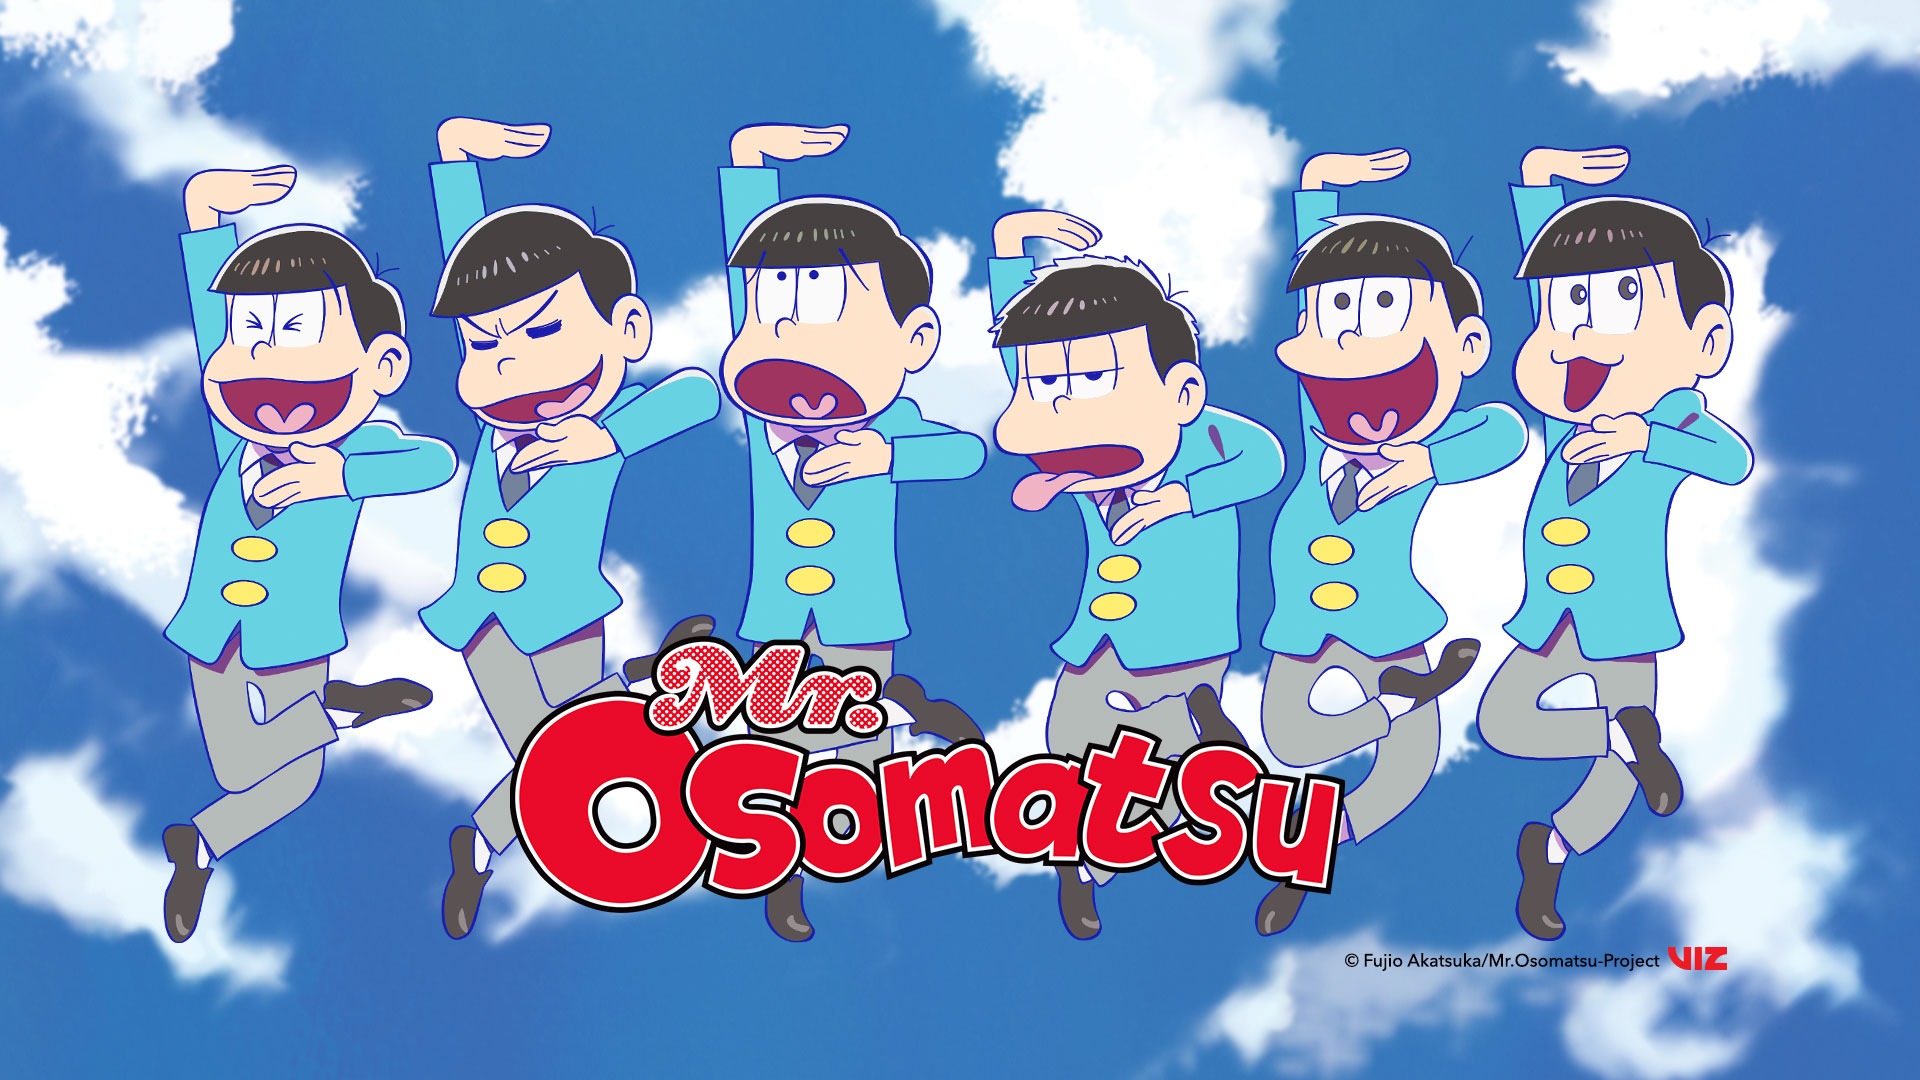 Mr. osomatsu characters